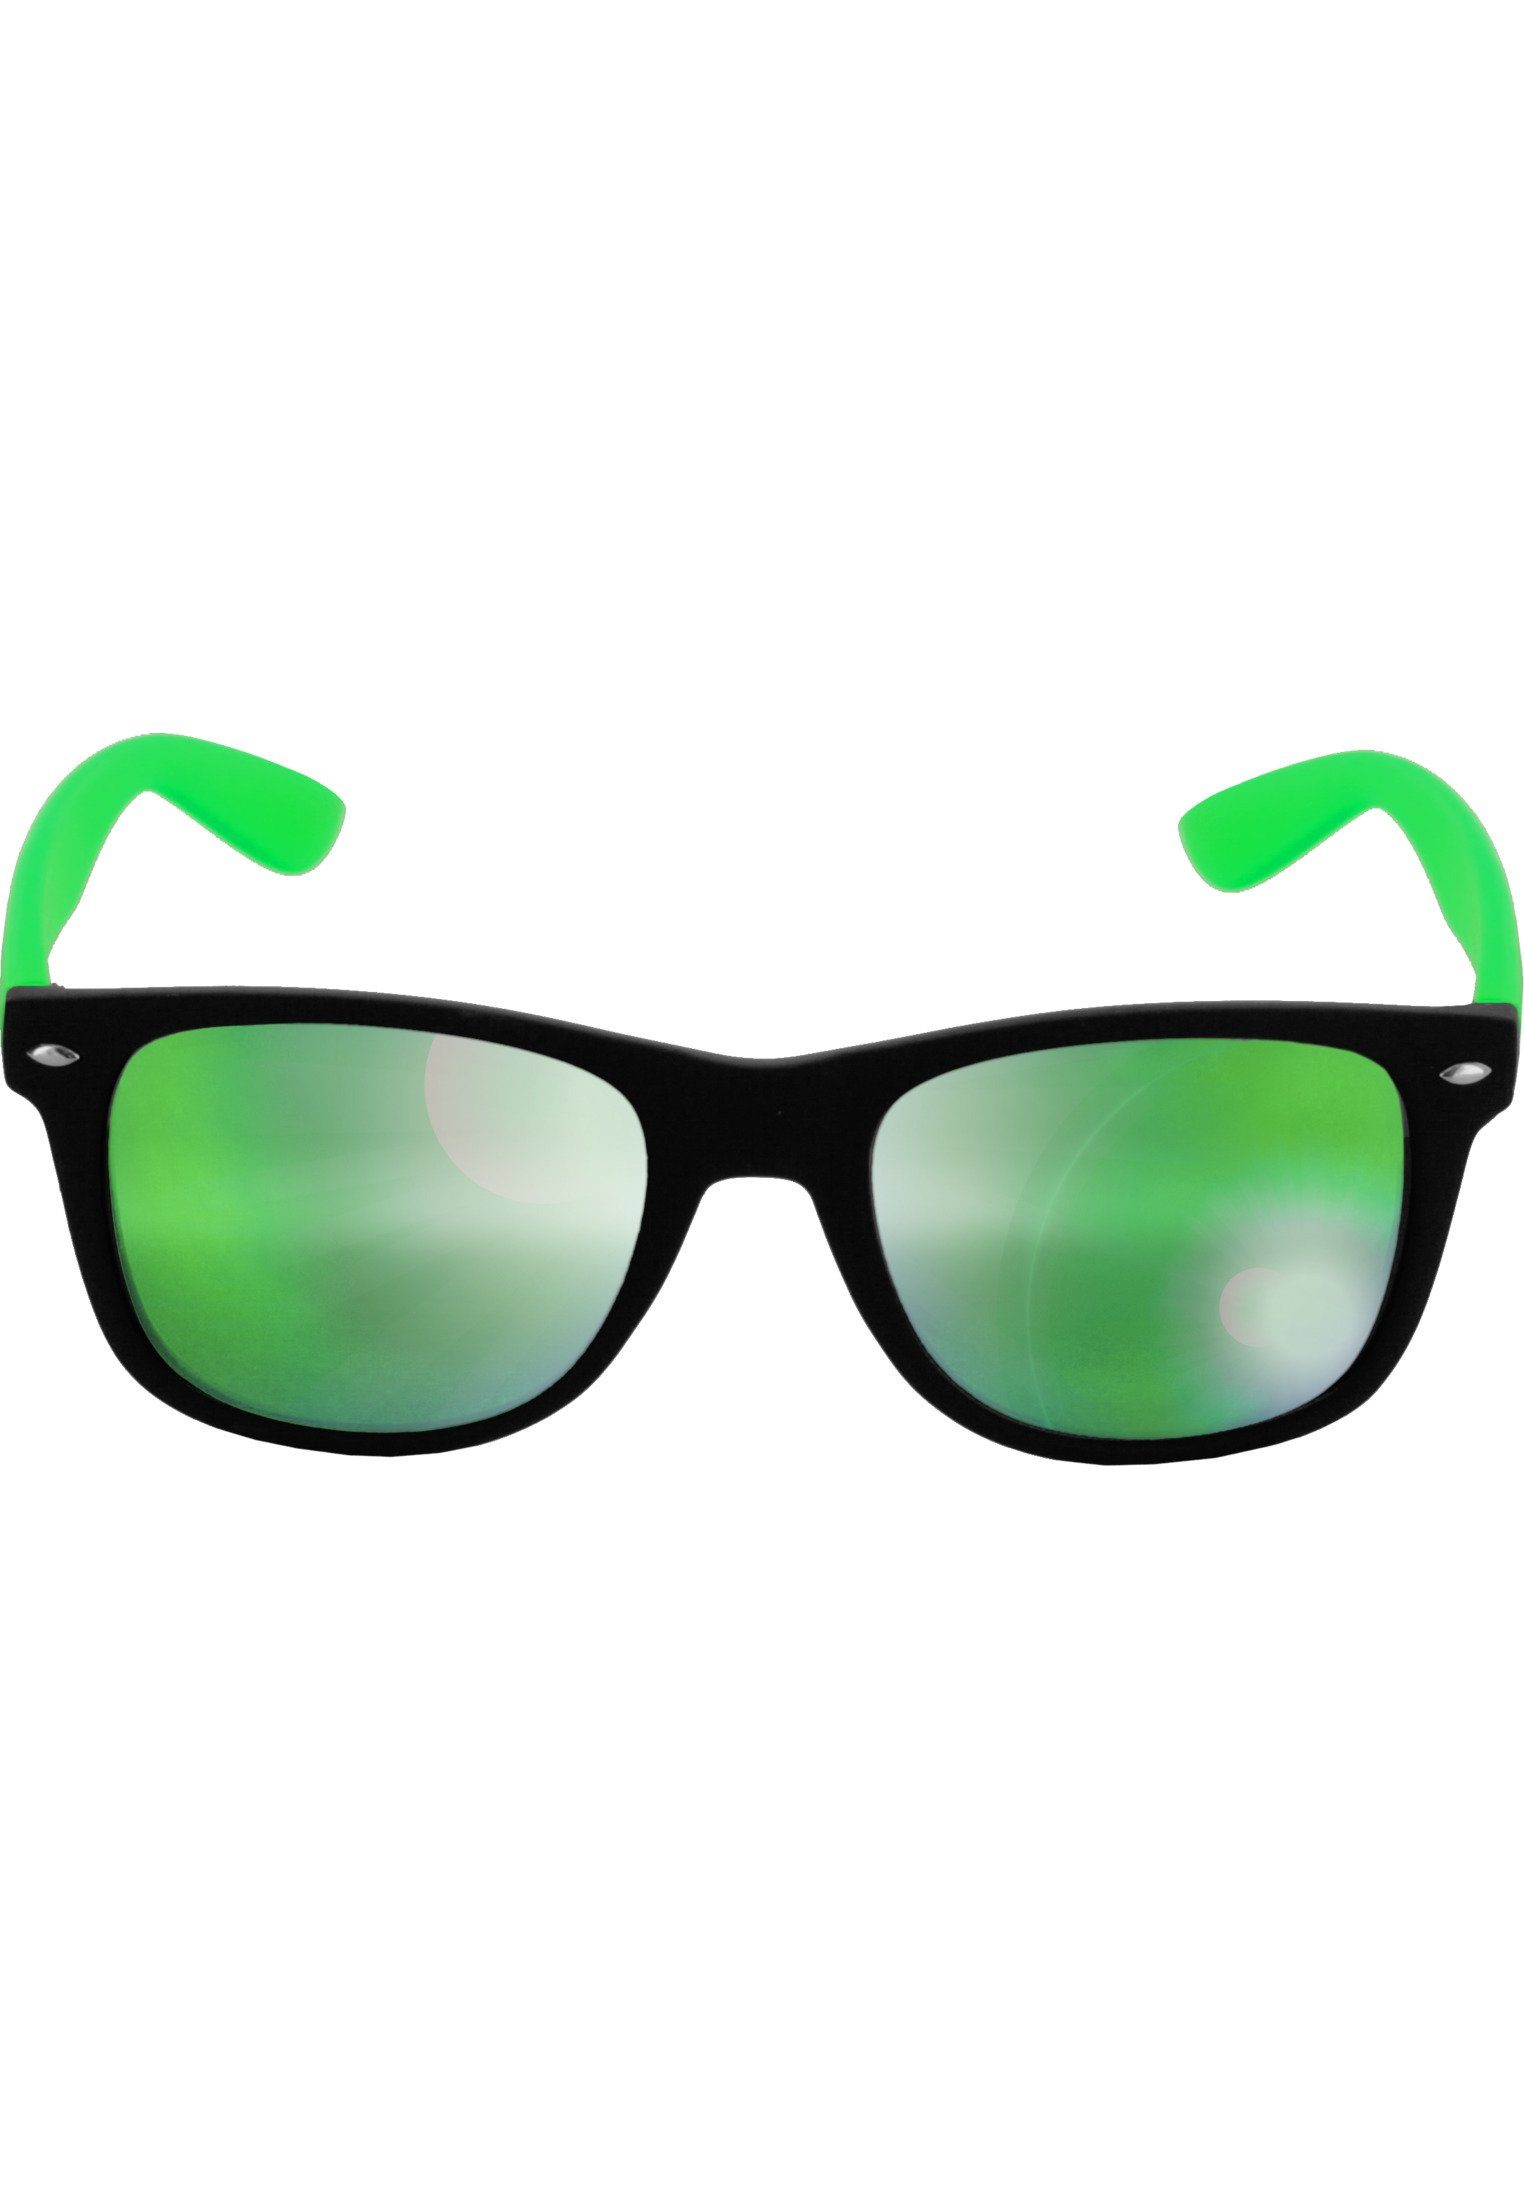 MSTRDS Sonnenbrille Accessoires Sunglasses blk/lgr Mirror Likoma